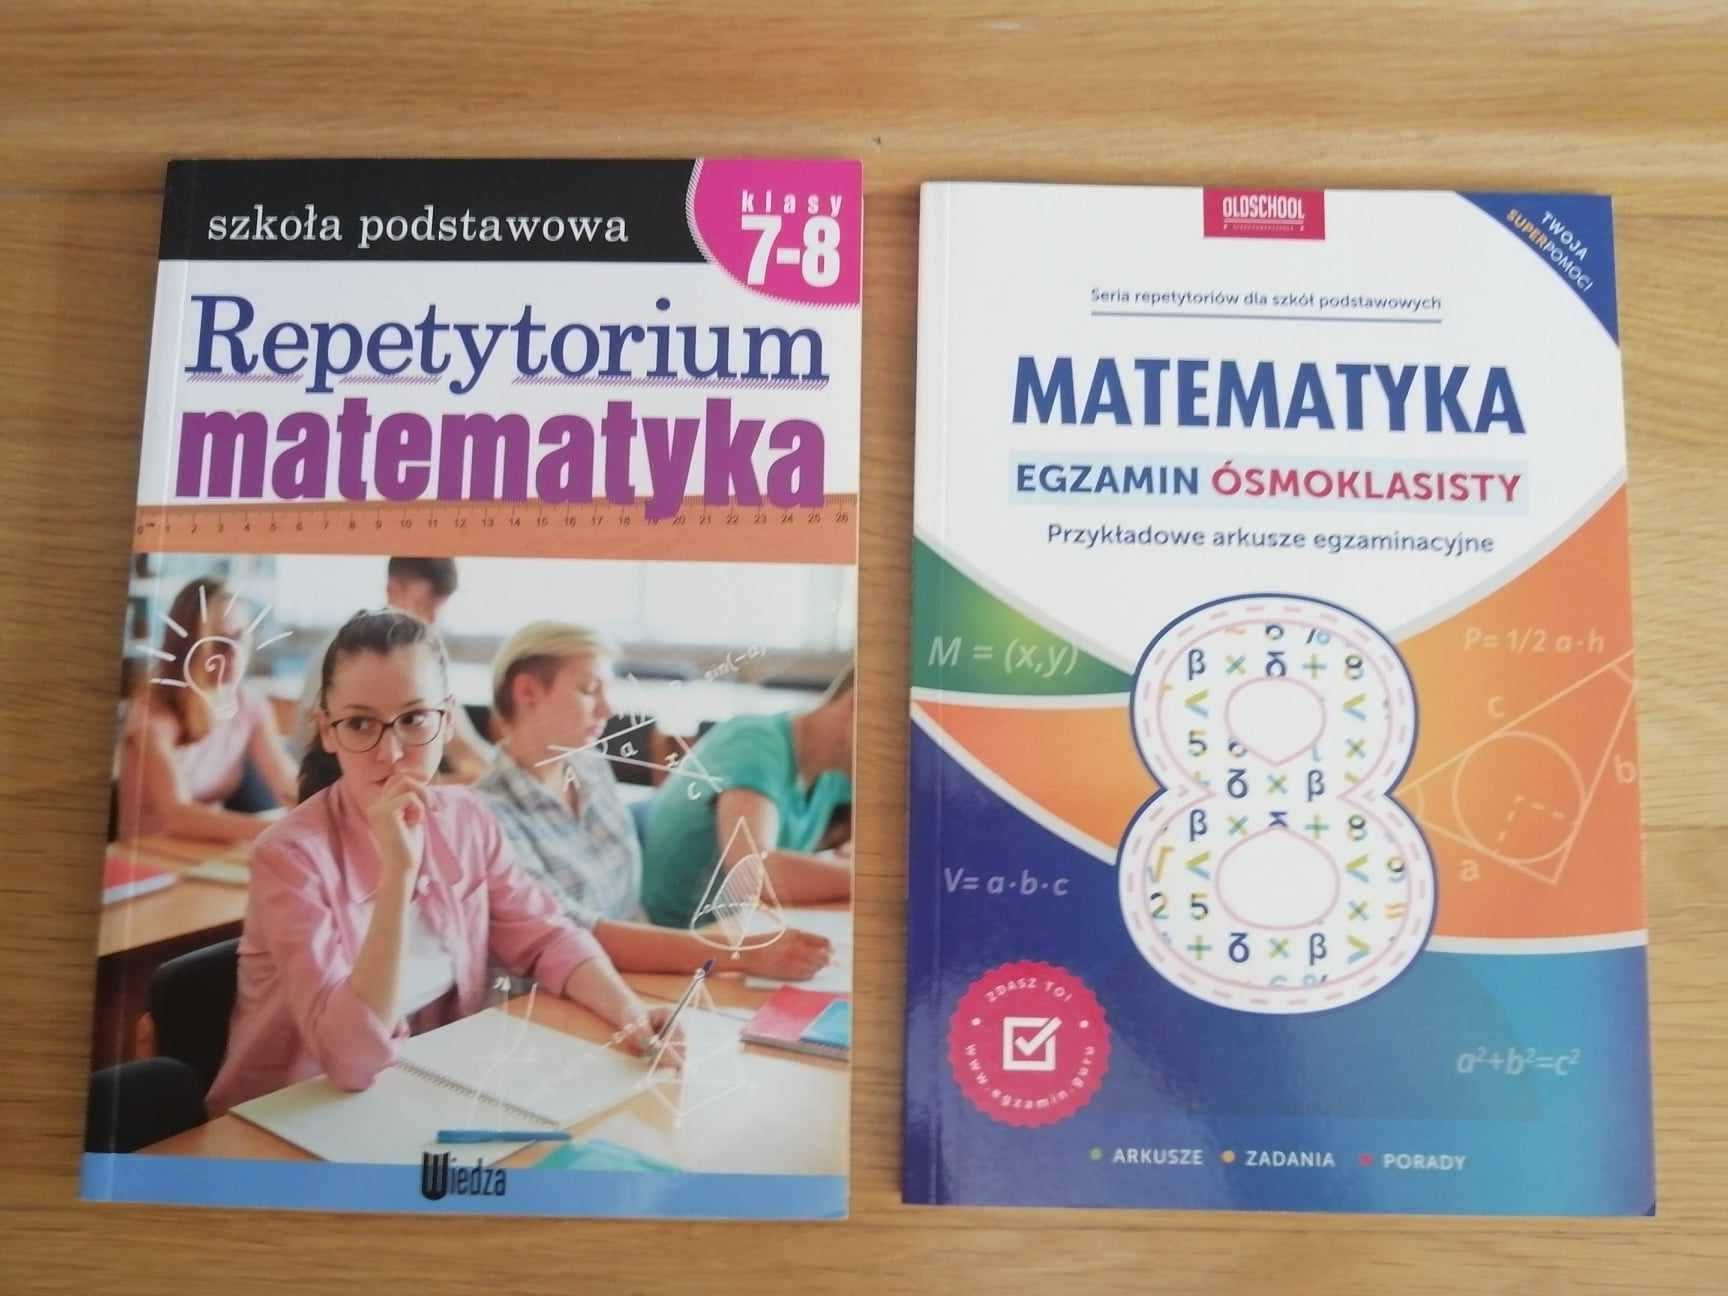 Matematyka - egzamin ósmoklasisty oraz repetytorium